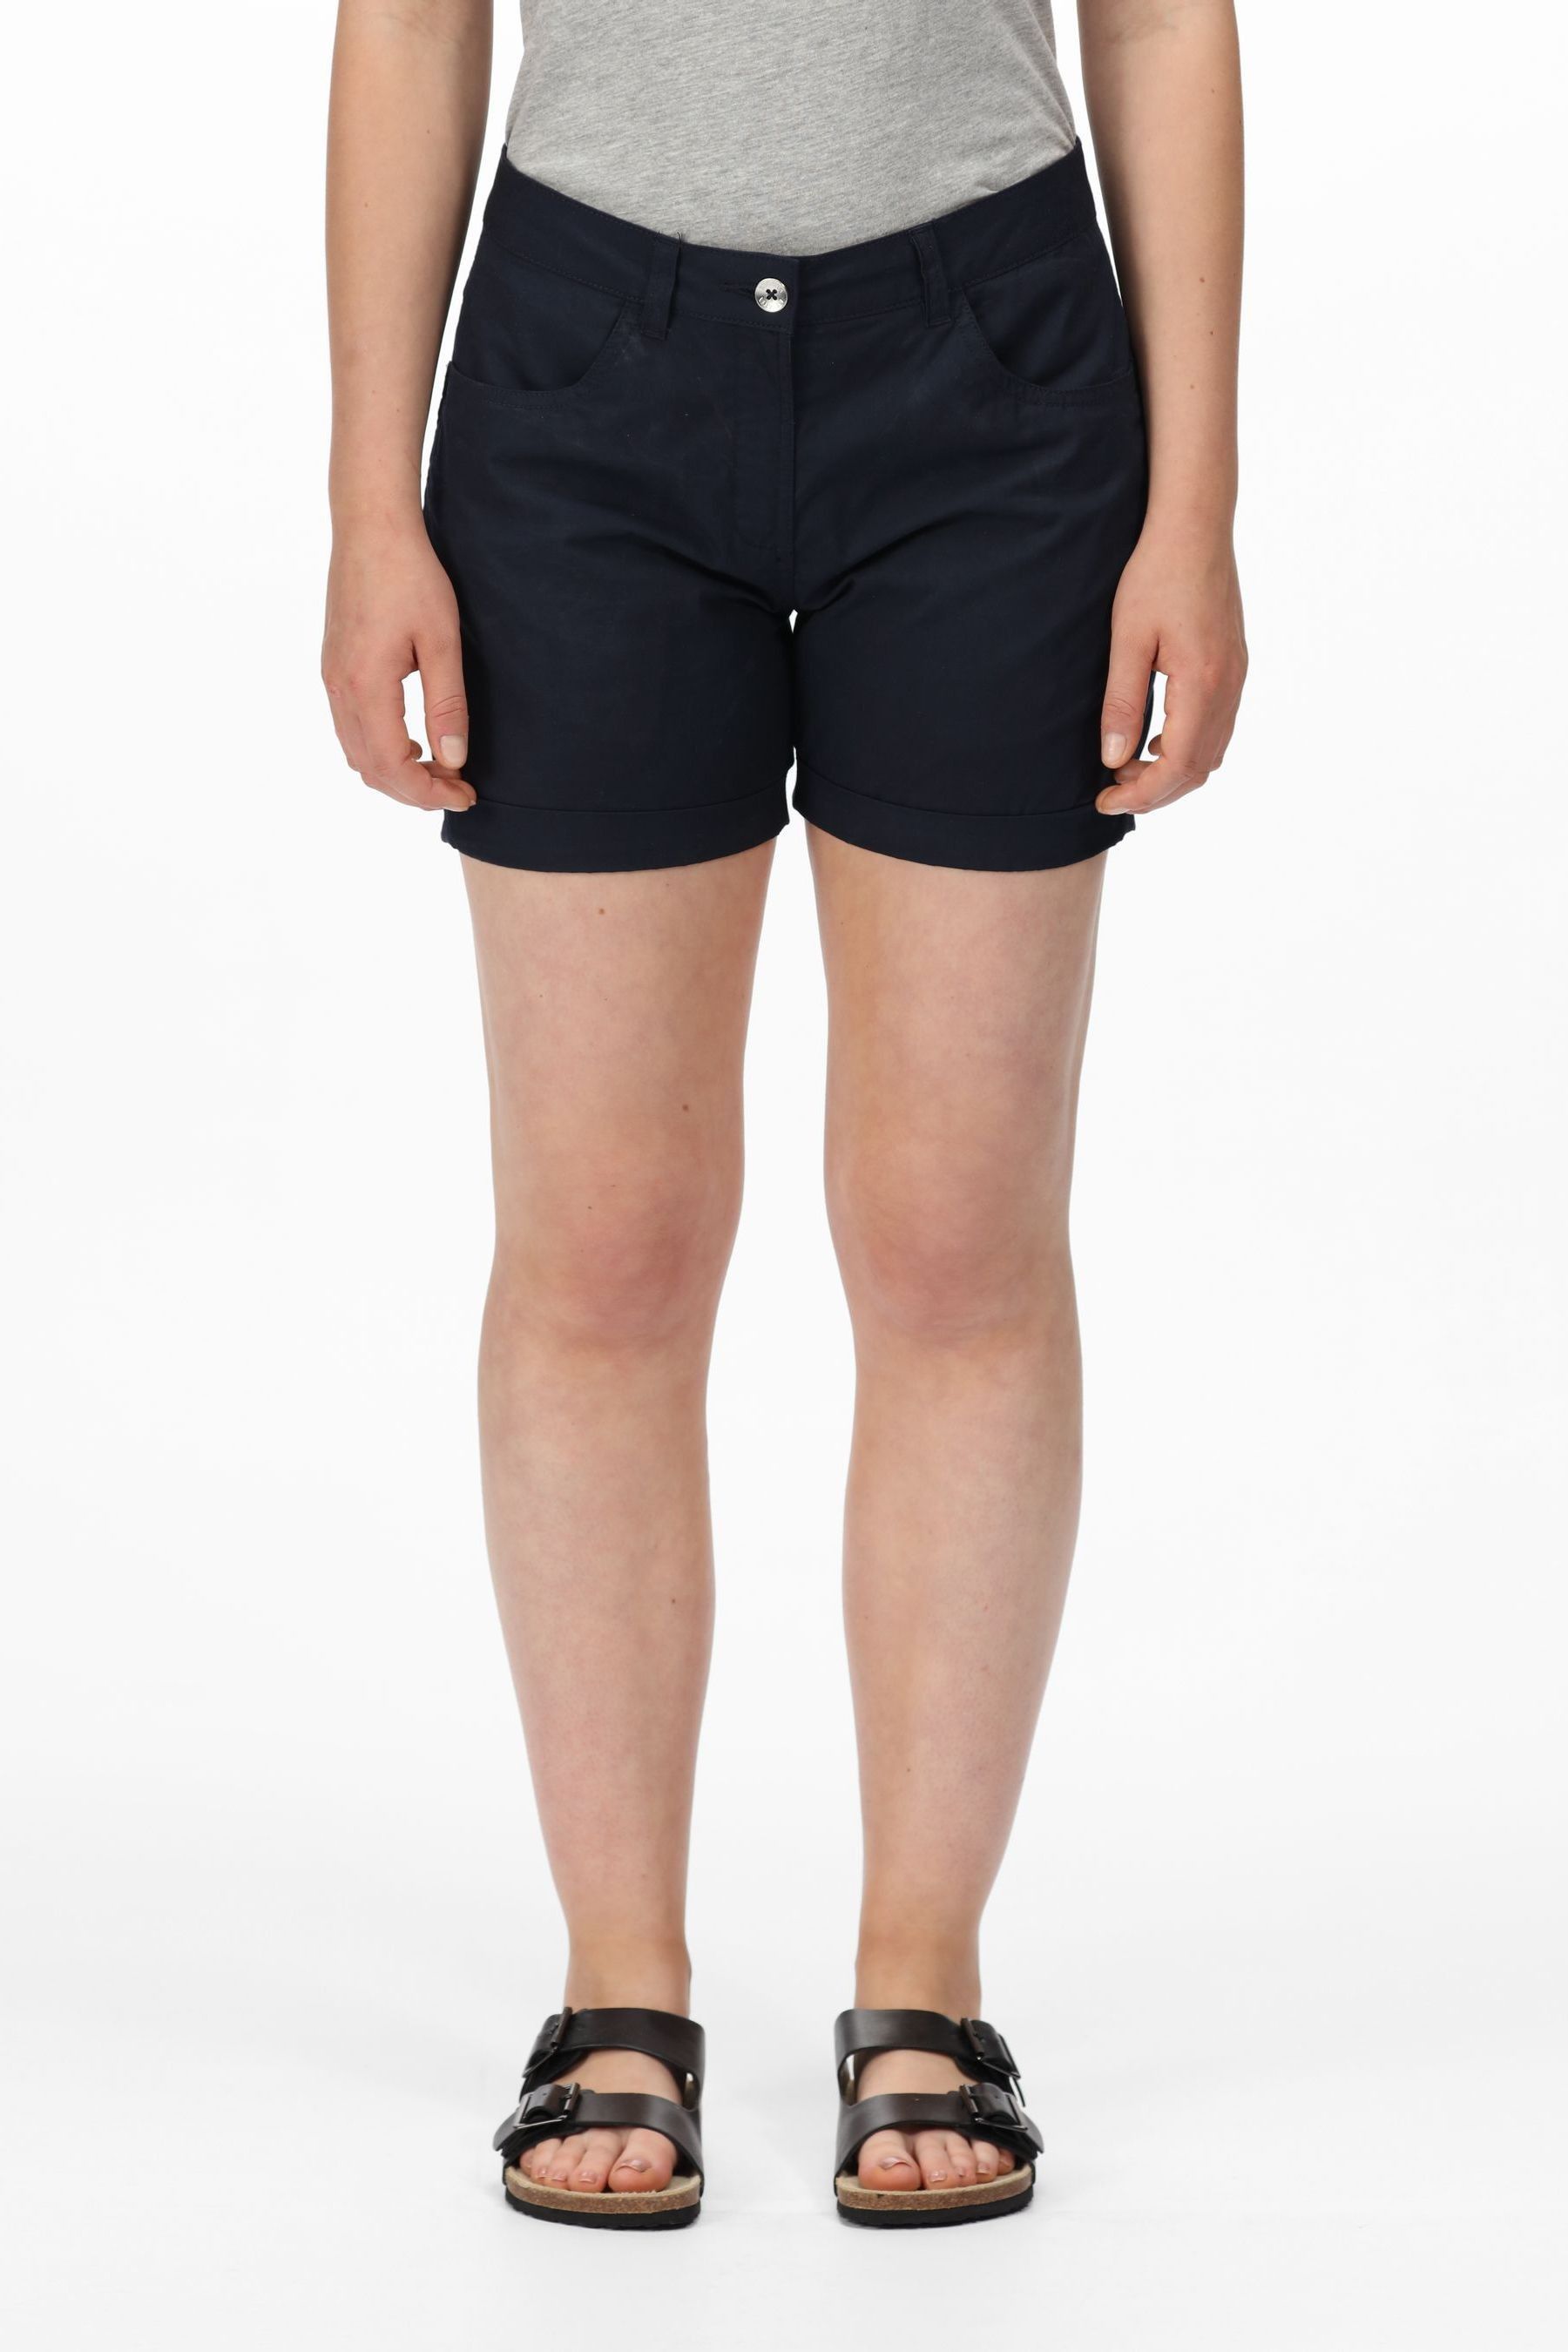 Buy Regatta Blue Pemma Cotton Shorts from the Next UK online shop